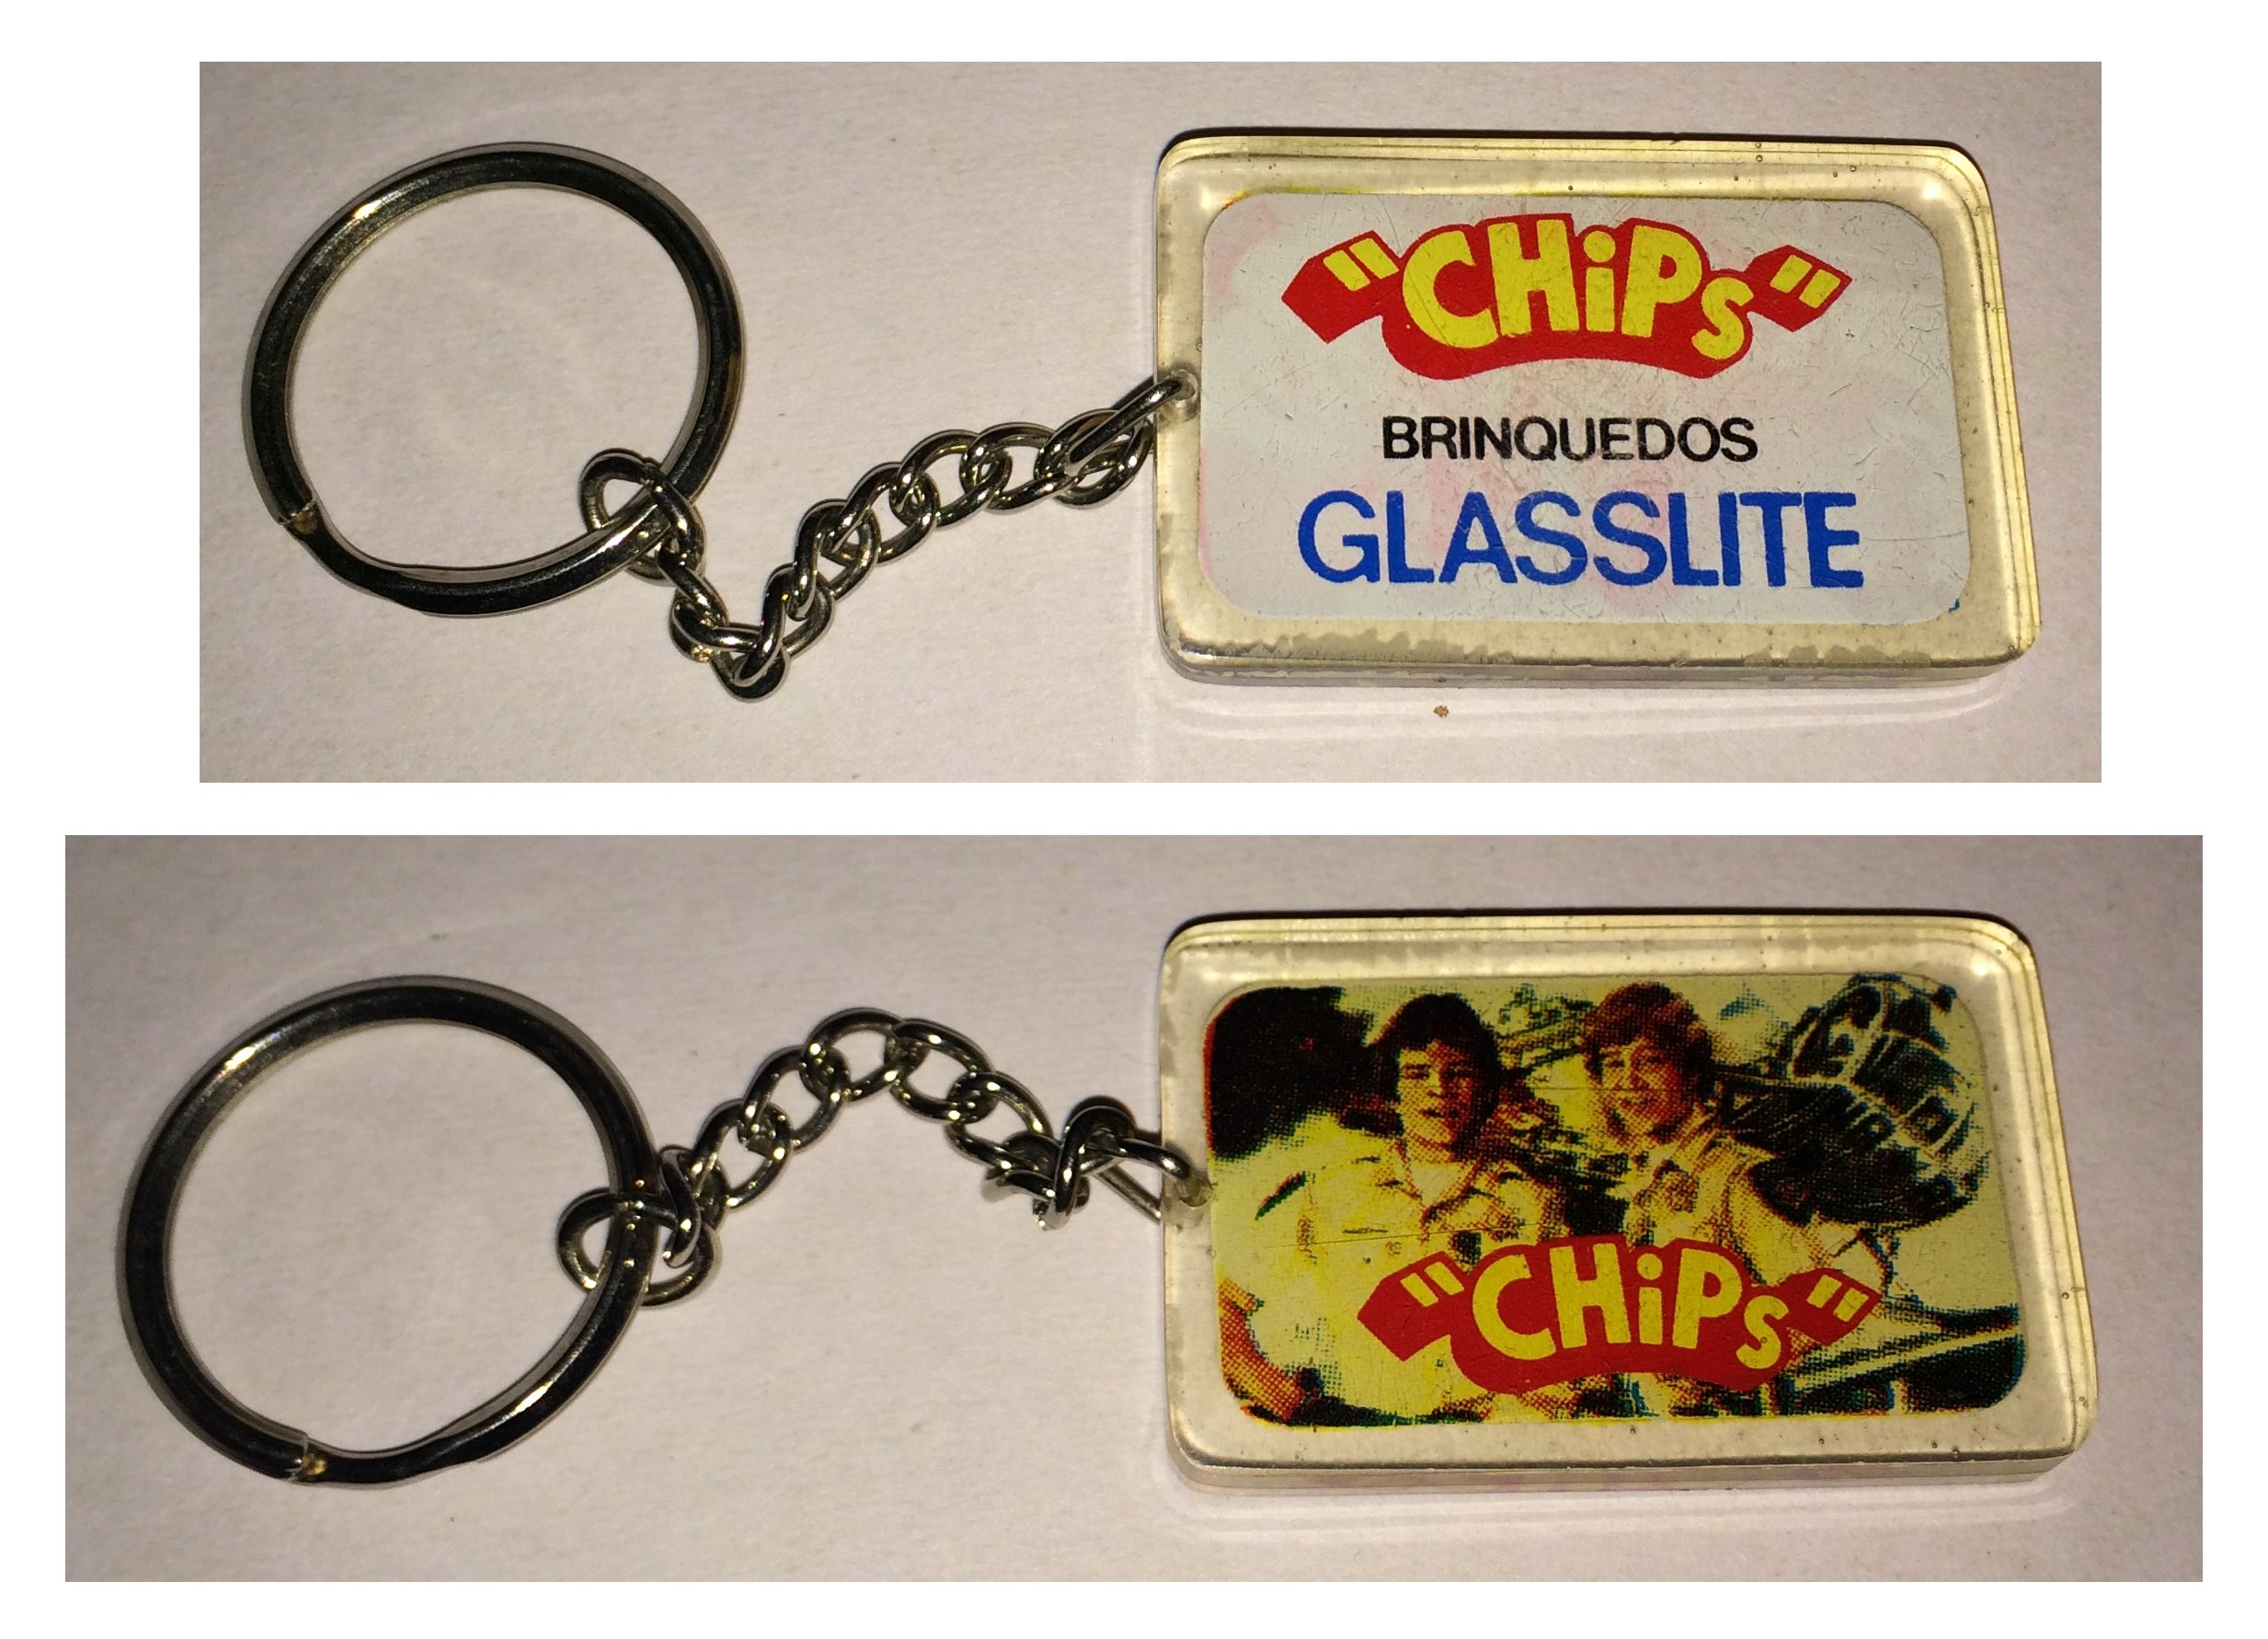 Glasslite keychain